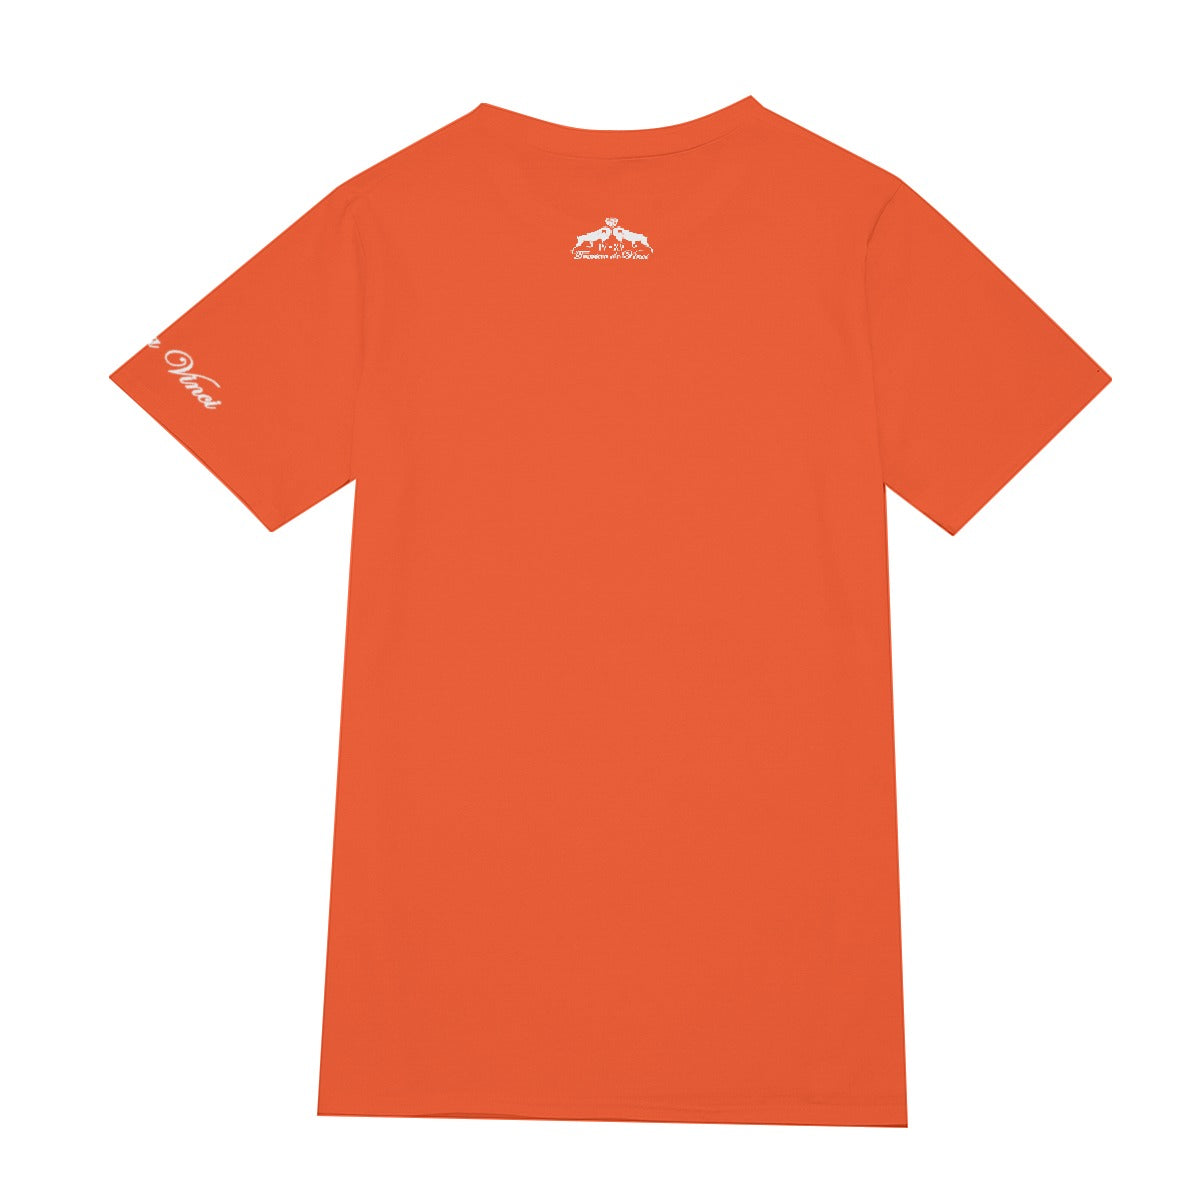 Center print logo tee - Orange